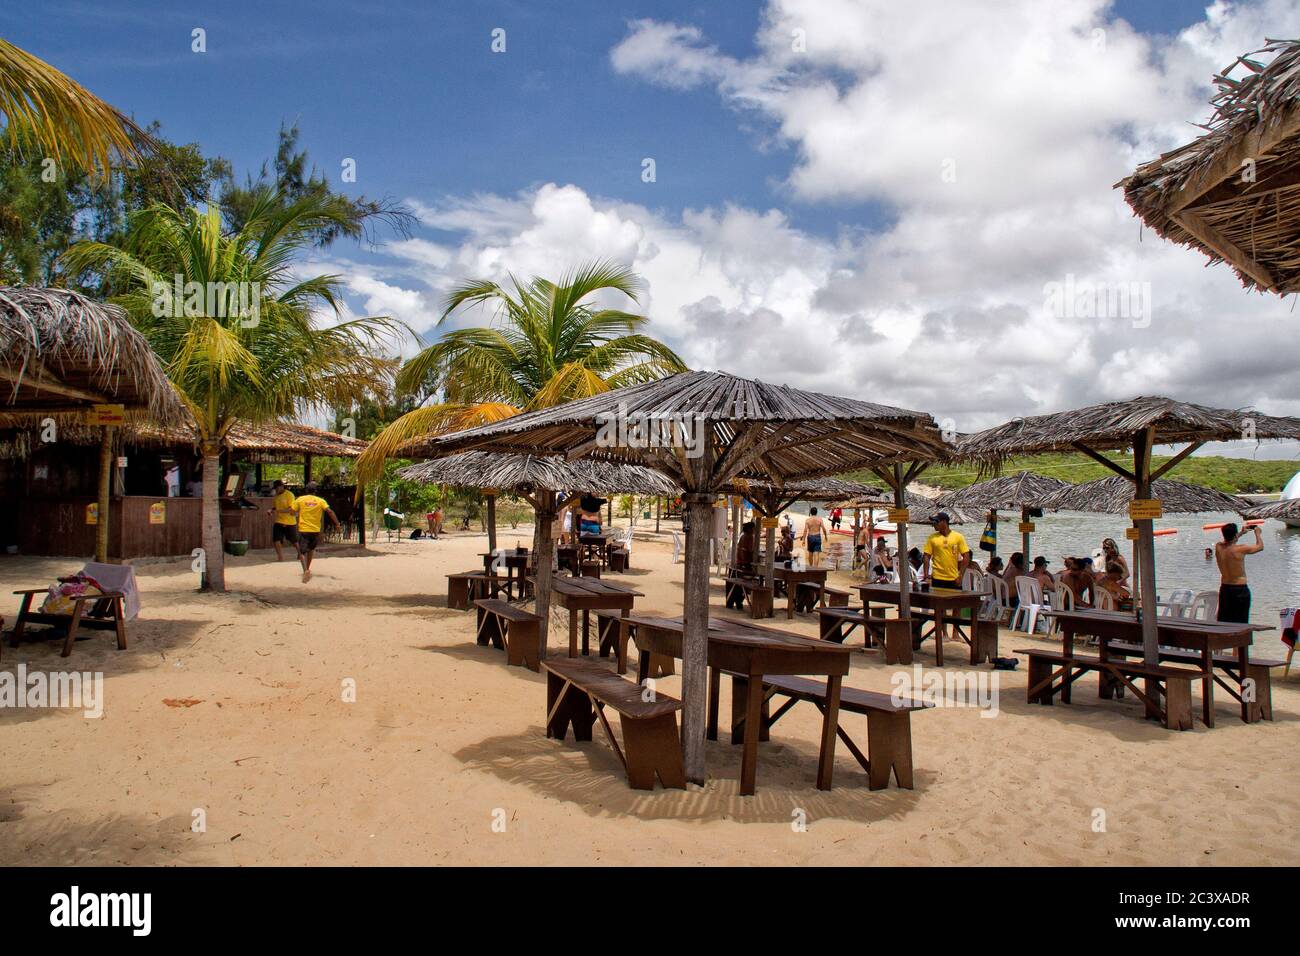 Genipabu dune e giro in laguna, Natal, Brasile. Un paradiso tropicale per vacanze, per avventure e relax. Foto Stock